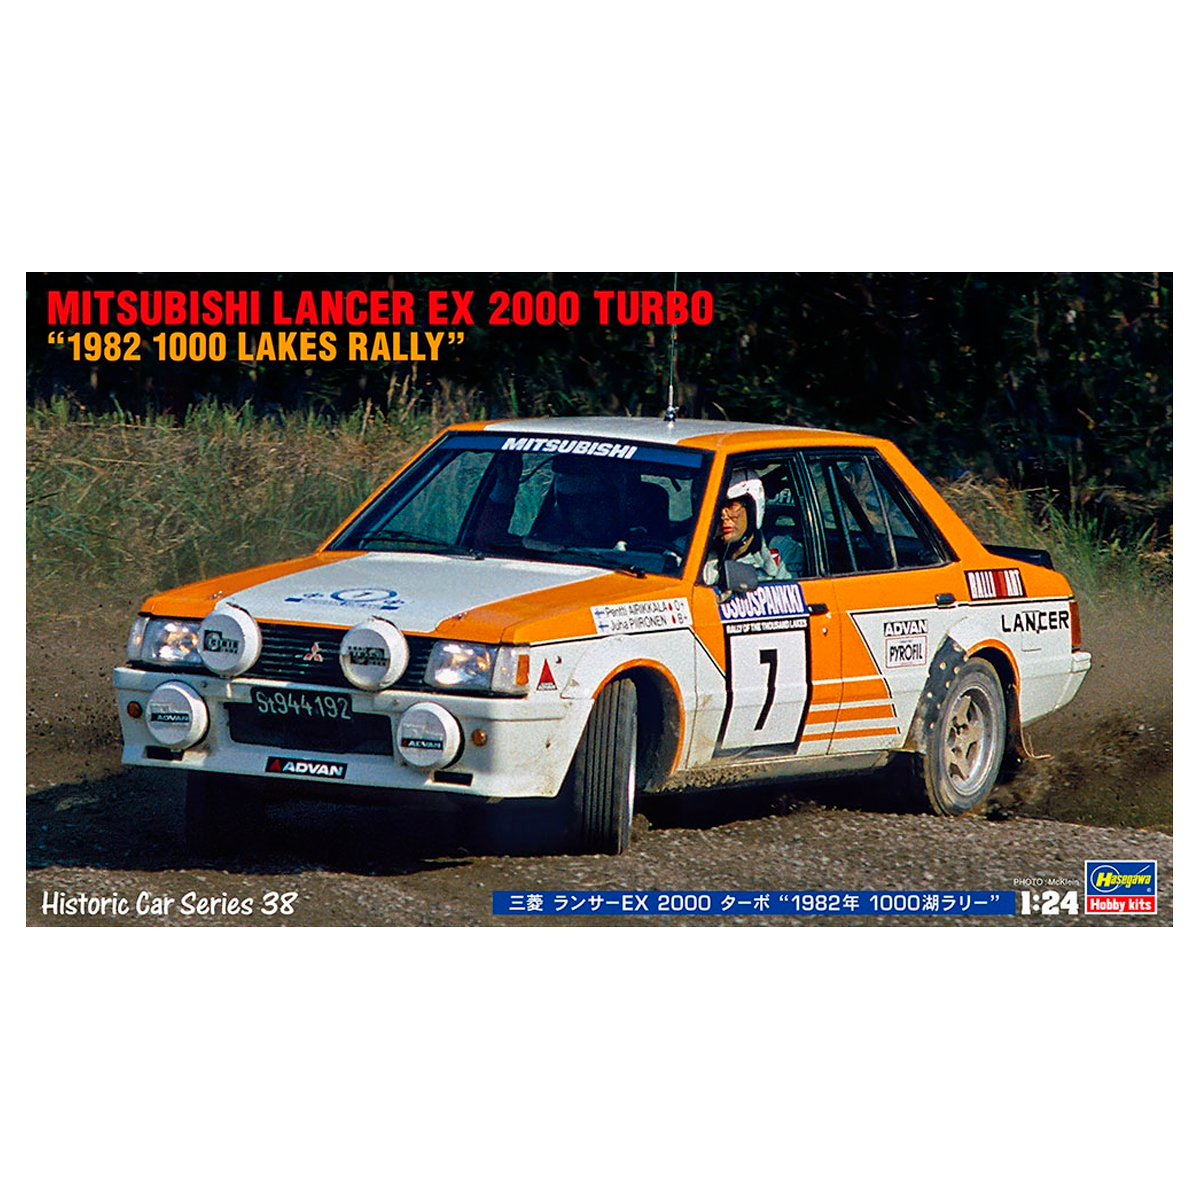 HC38 1/24 Mitsubishi Lancer EX 2000 Turbo «1000 Lakes Rally 1982»